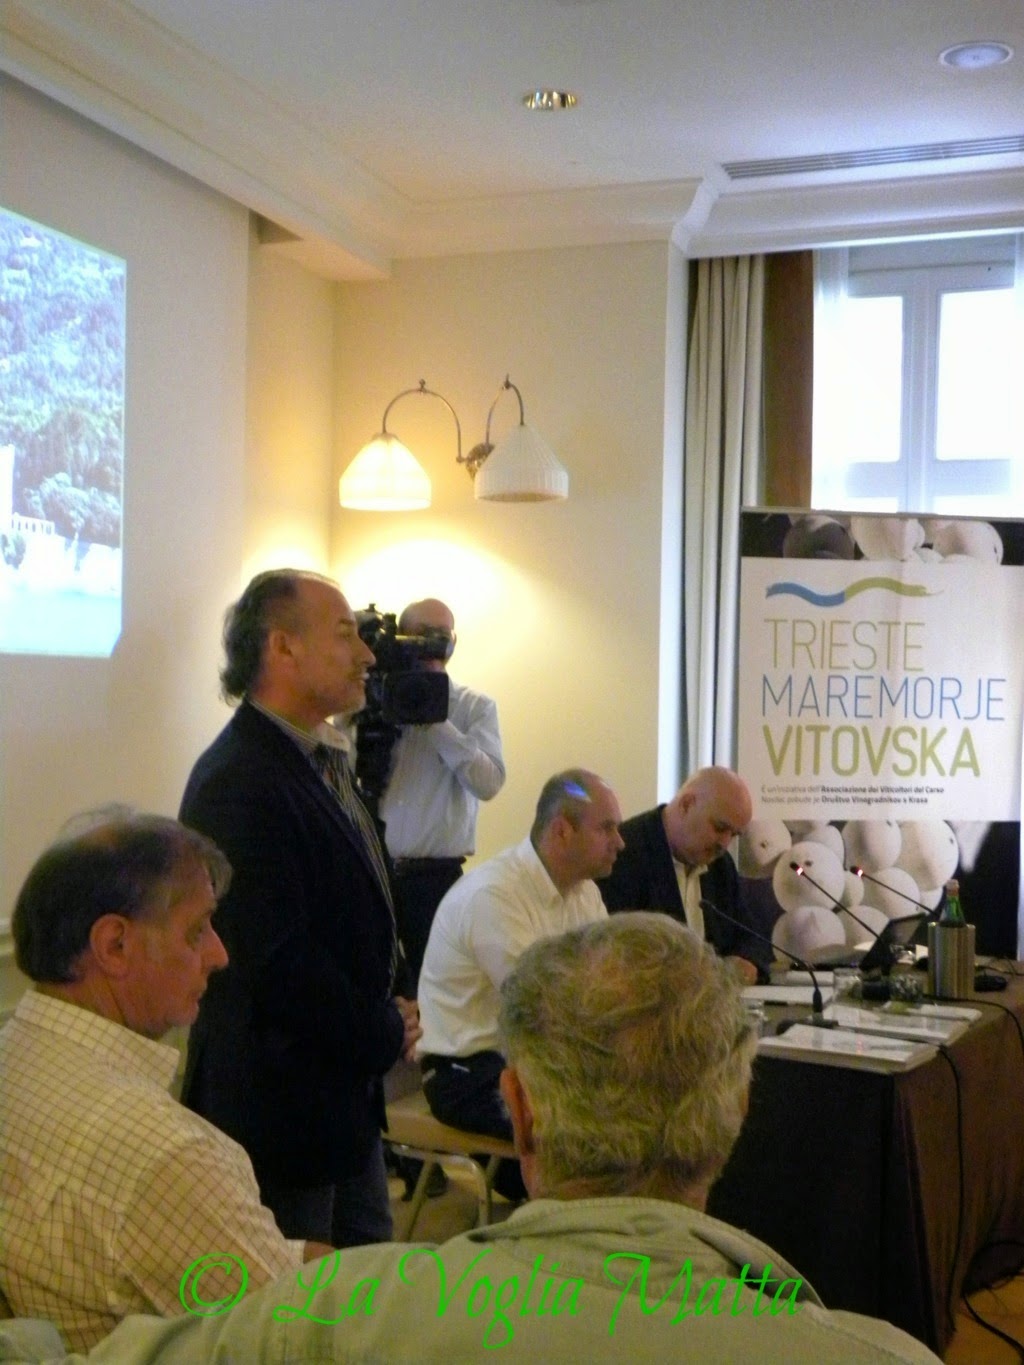 Maremorje Vitovska a Trieste conferenza stampa